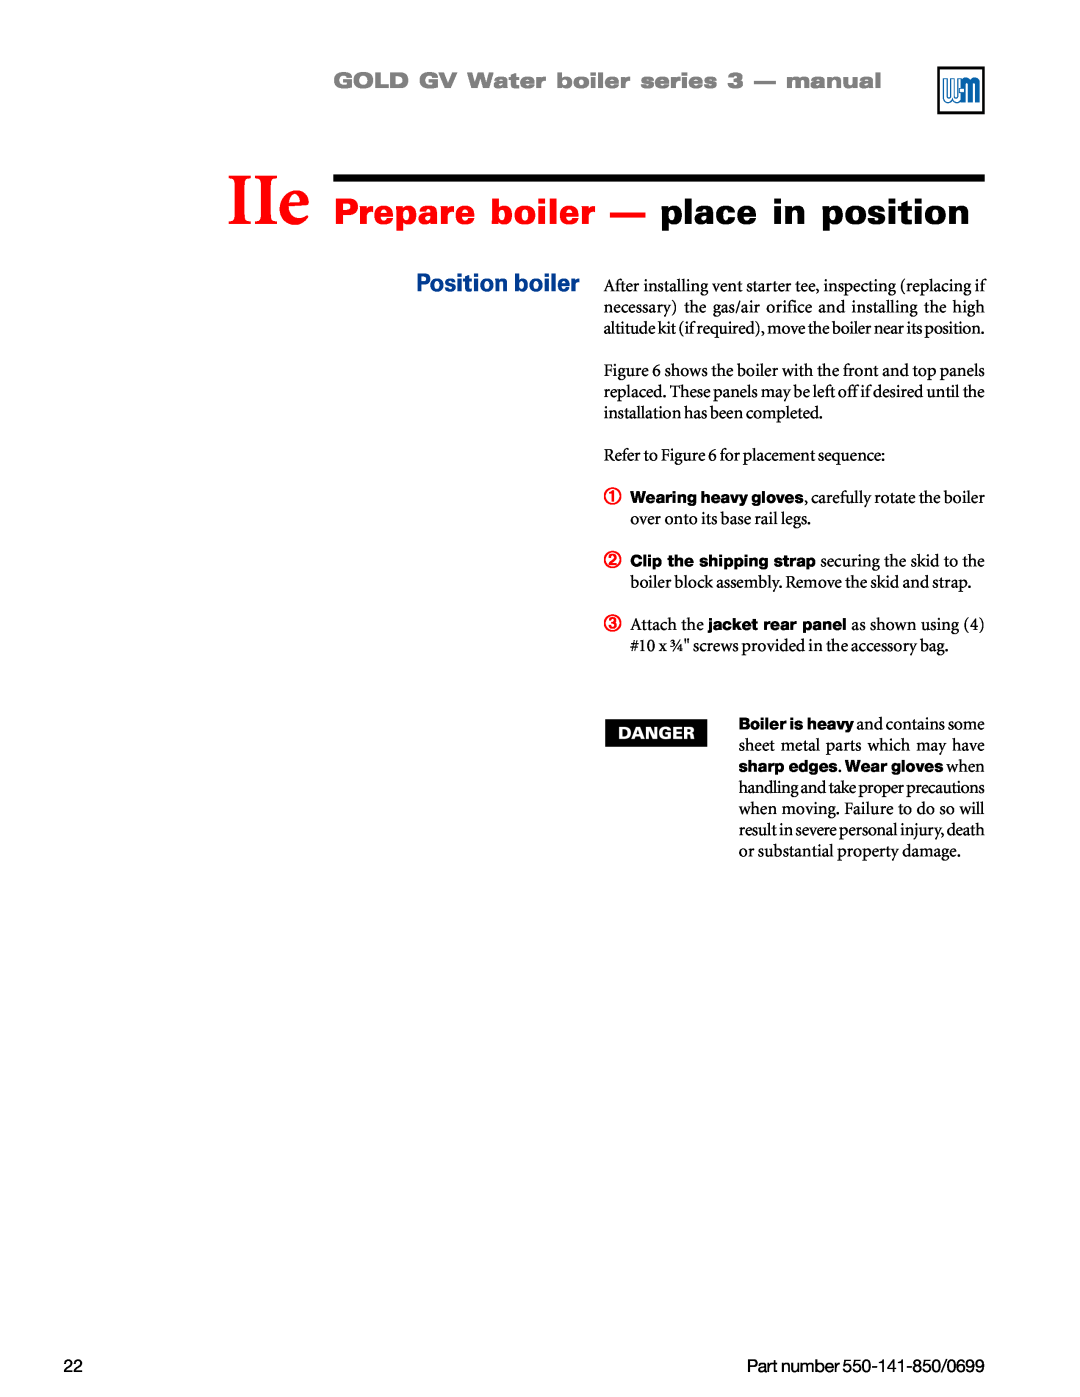 Weil-McLain GOLD DV WATER BOILER IIe Prepare boiler — place in position, GOLD GV Water boiler series 3 — manual 